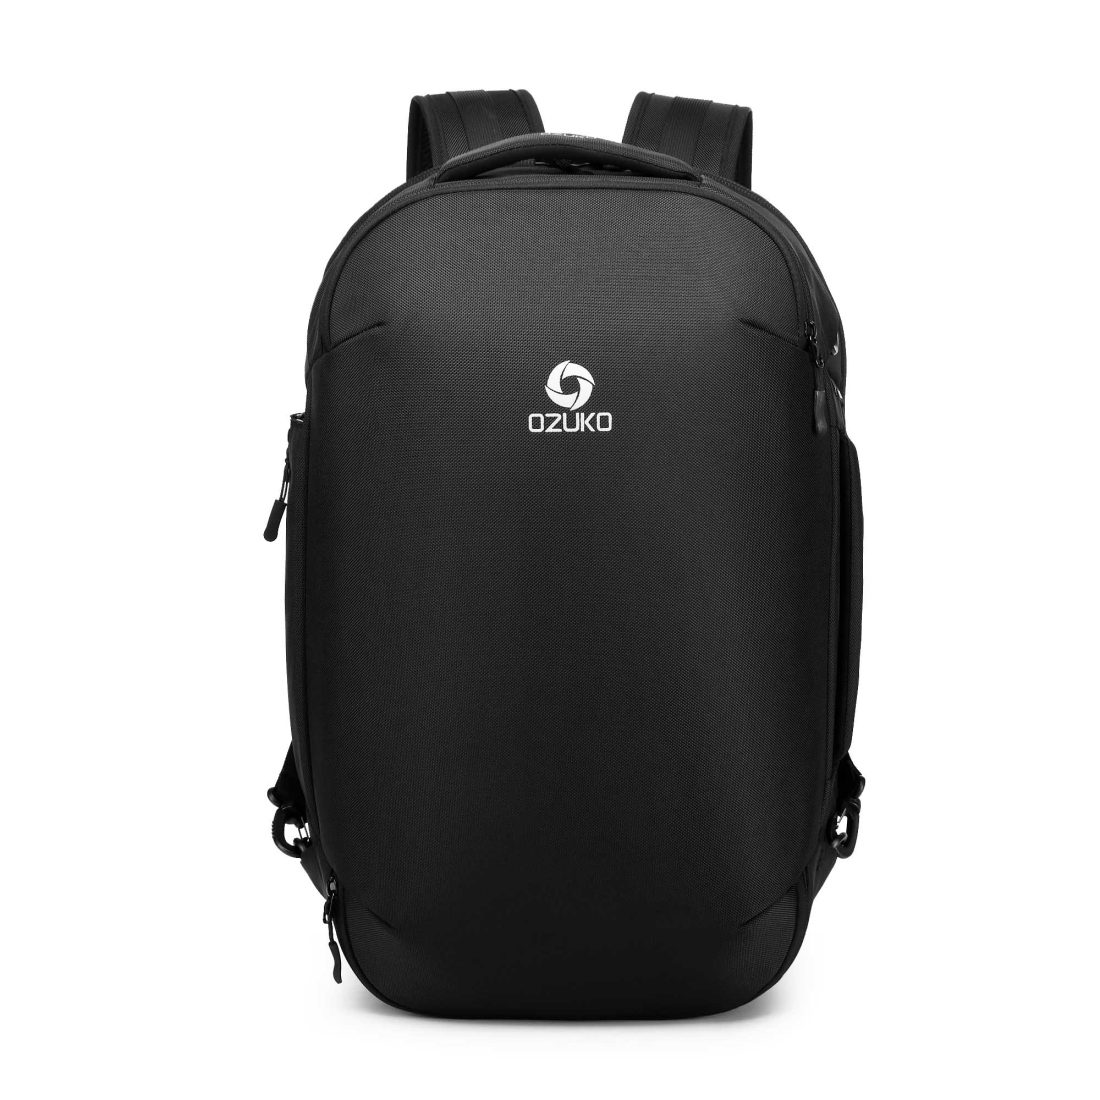 Ozuko 9216 Logo Lightweight Water Proof Laptop Backpack